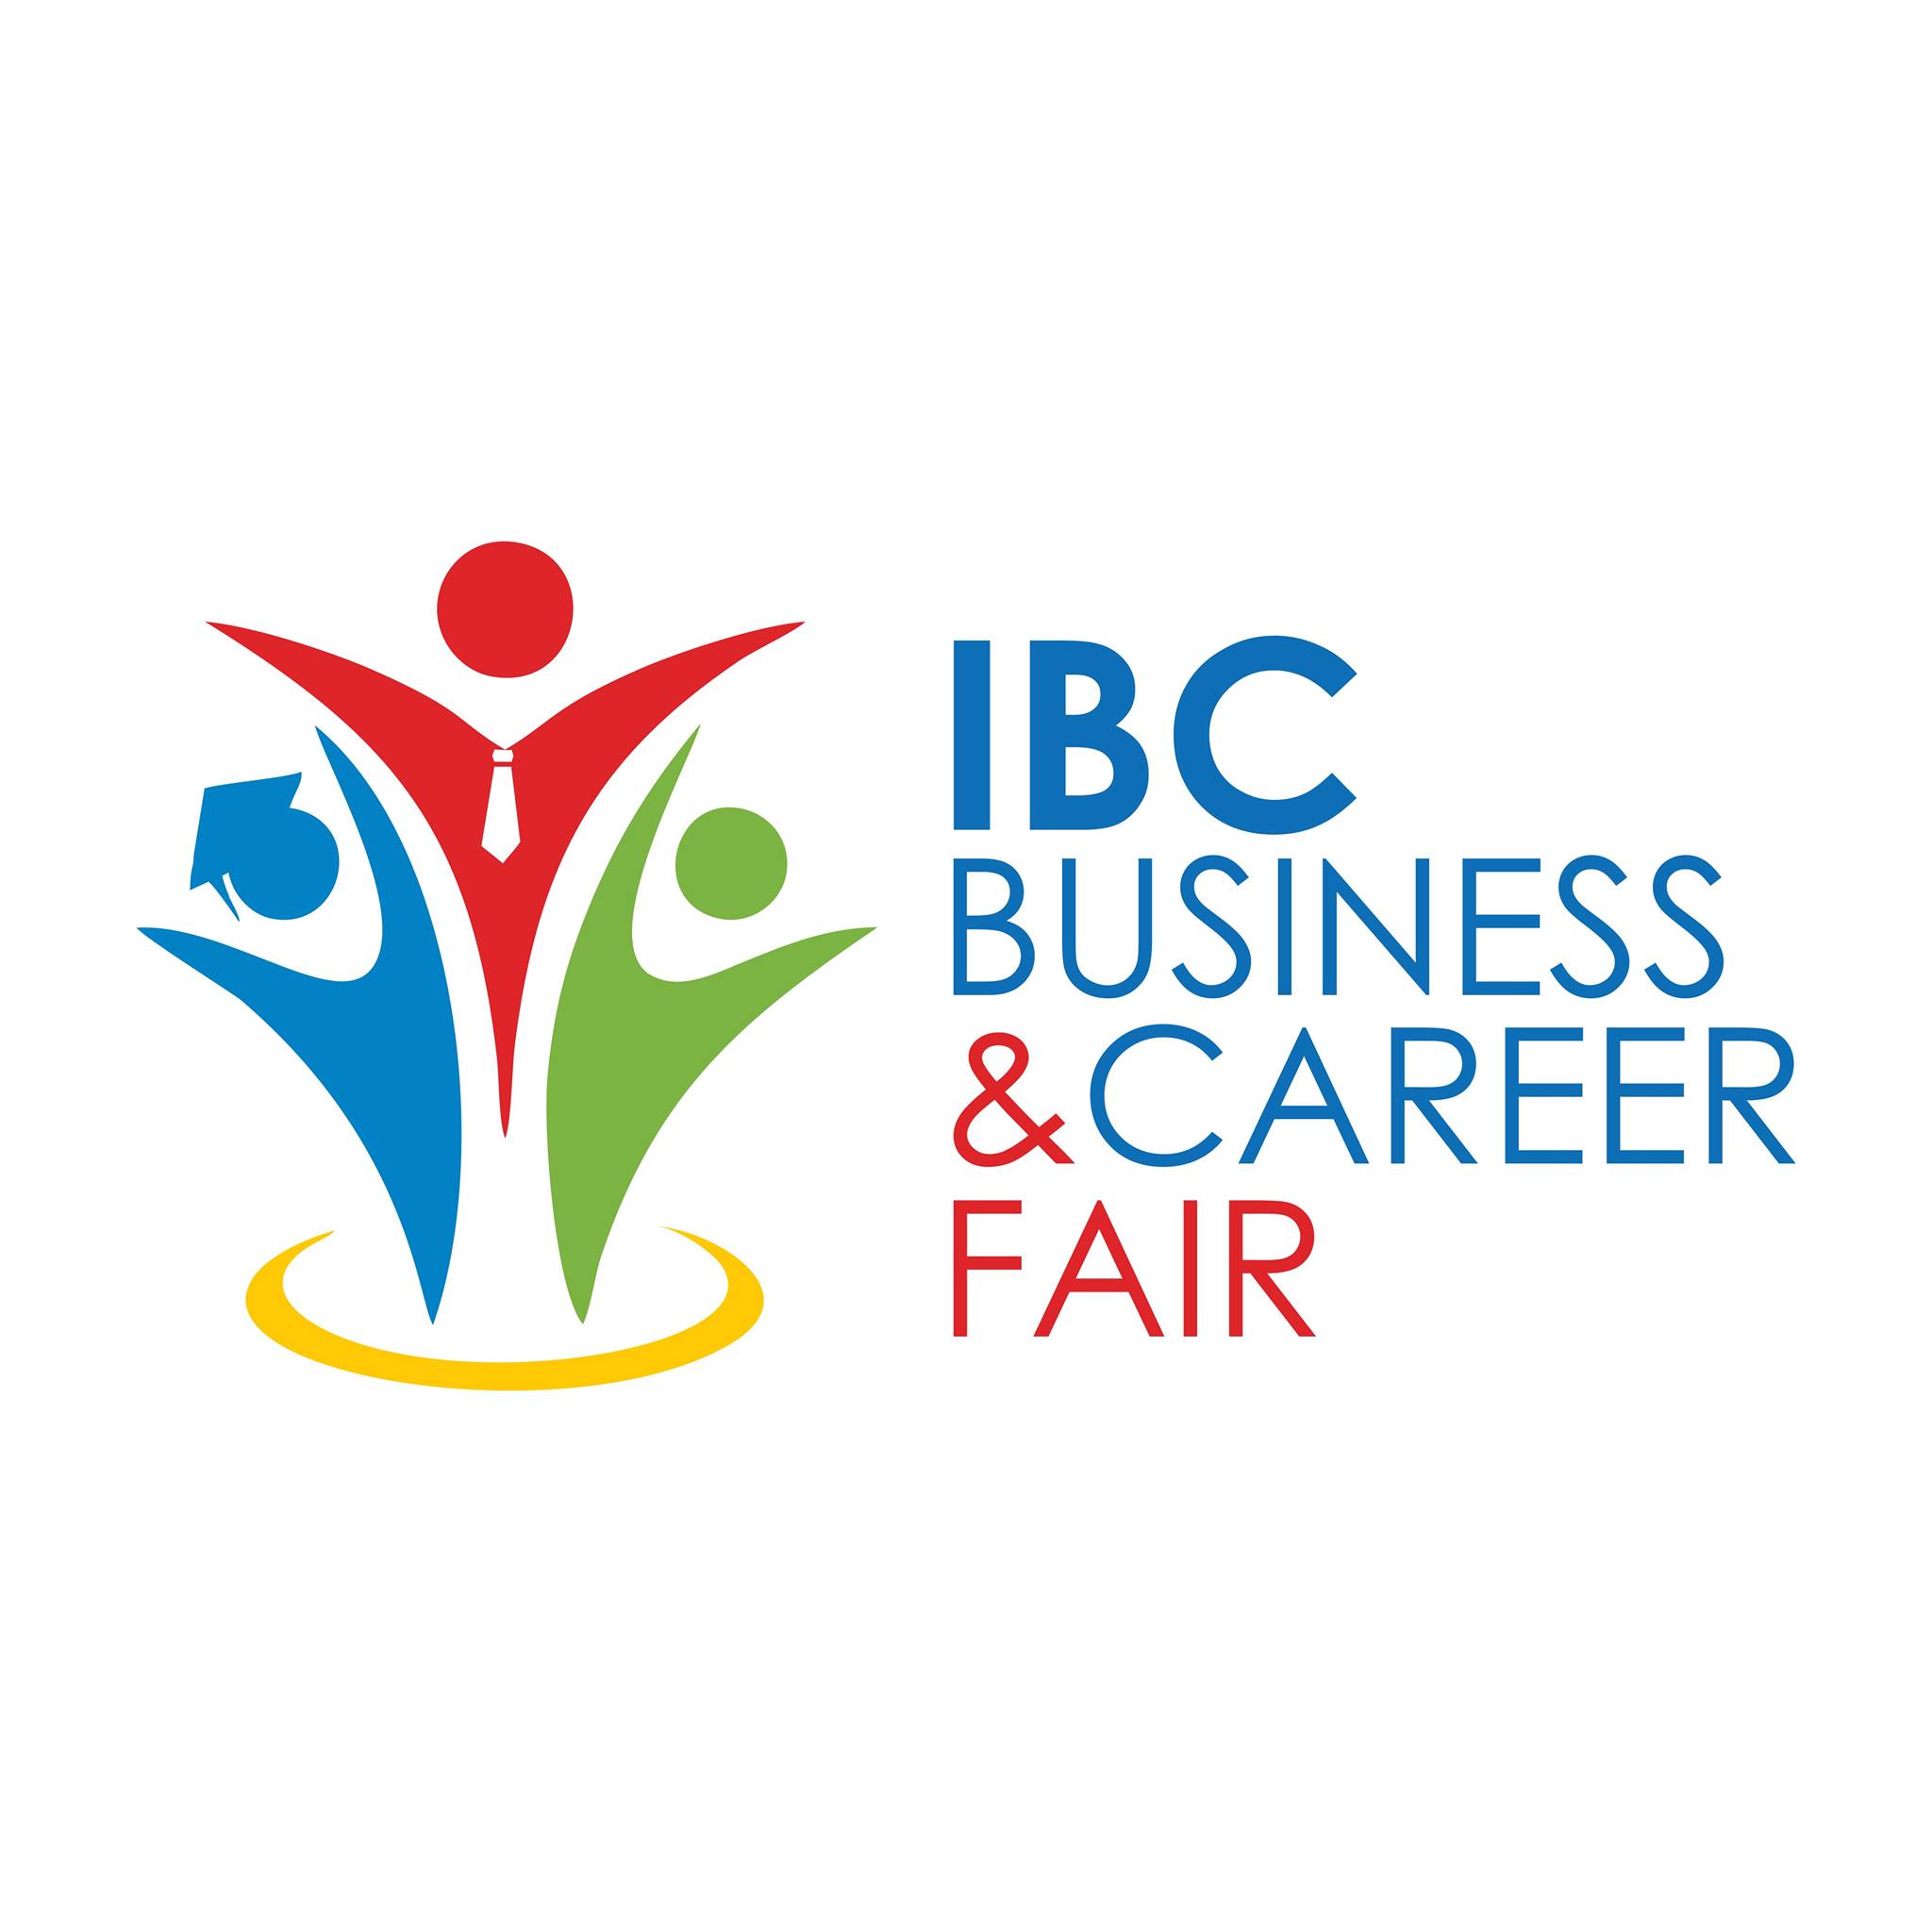 IBC Business & Career Fair 2017